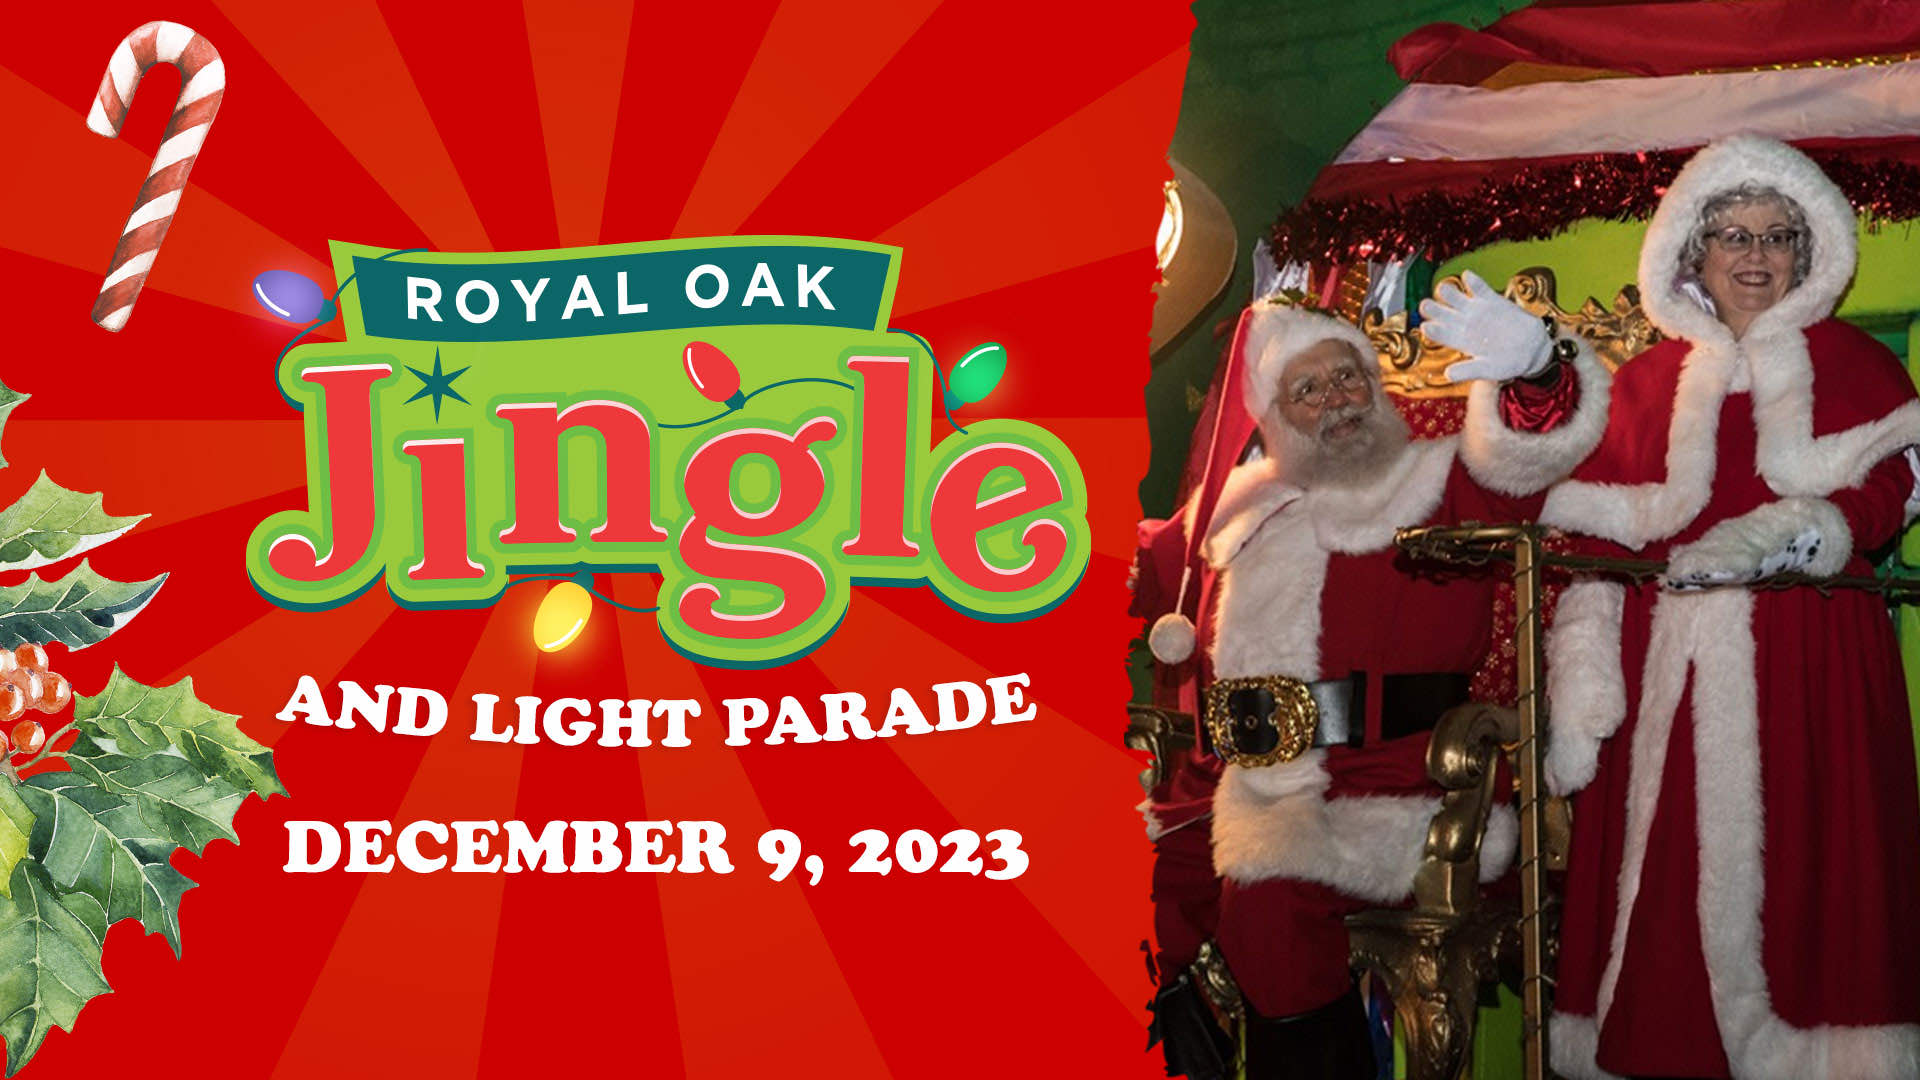 Royal Oak Jingle & Lighted Parade; December 9, 2023 featuring image of Santa & Mrs. Claus